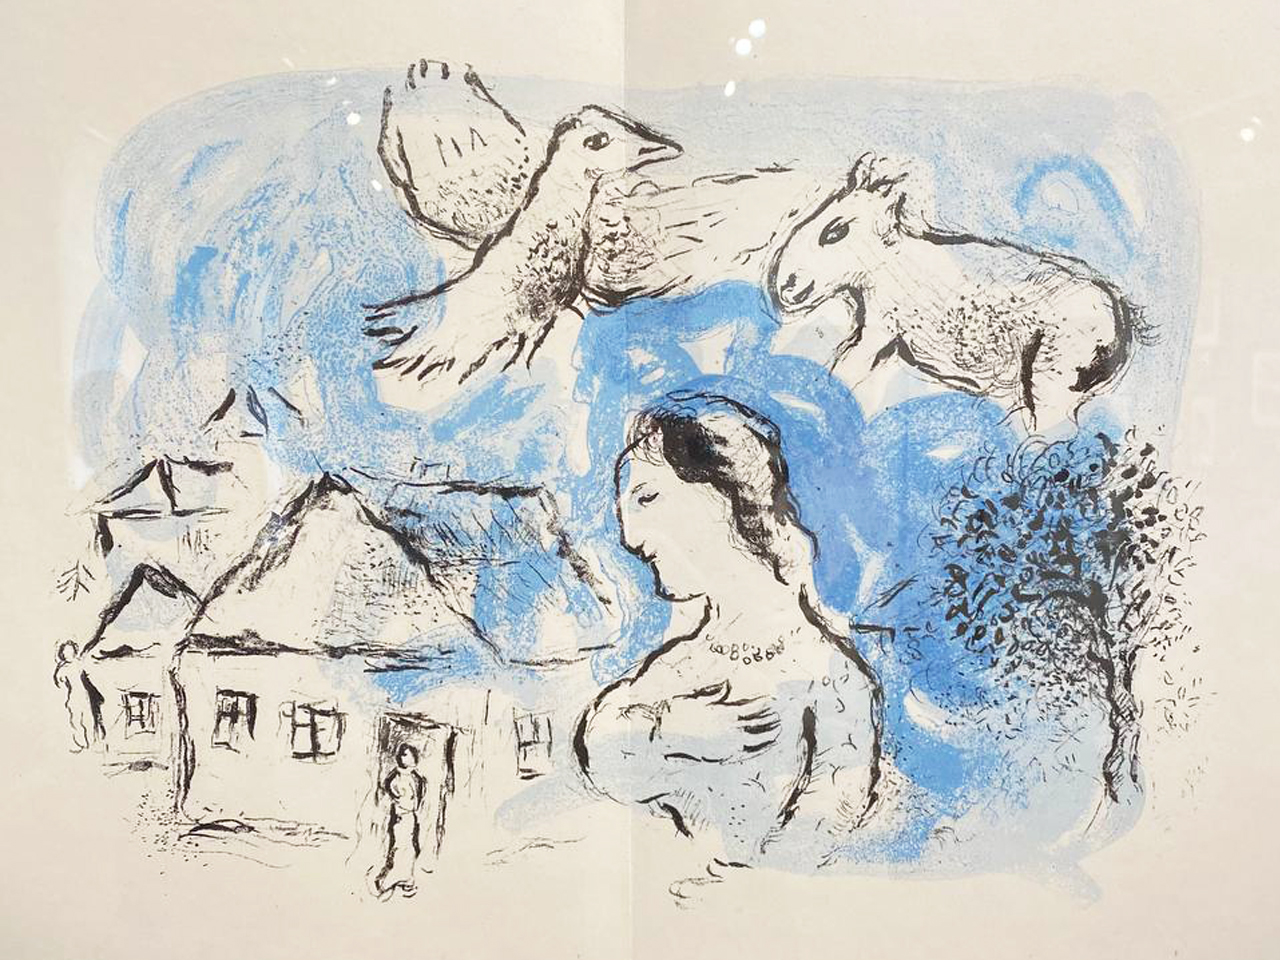 Выставка «Три эпохи Марка Шагала»